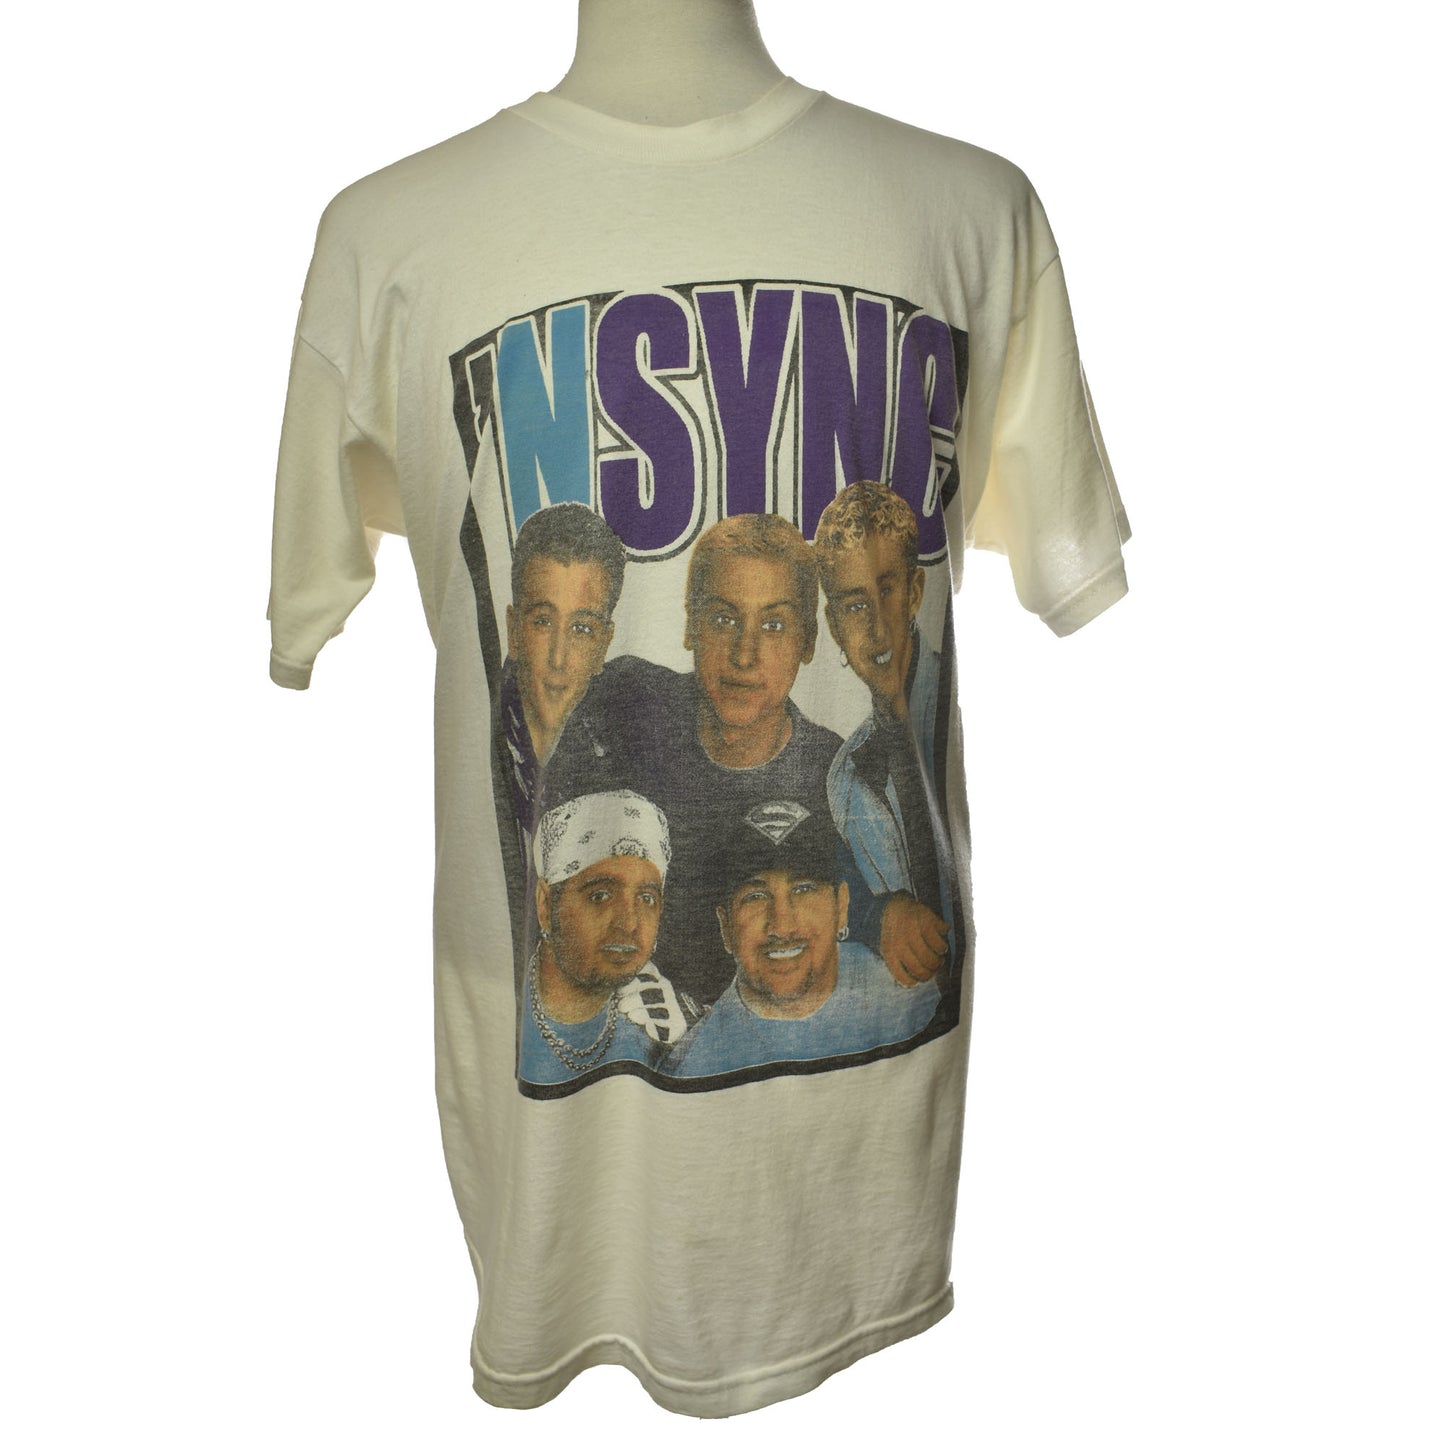 Vintage 1999 NSYNC Tour T-shirt With Back Print